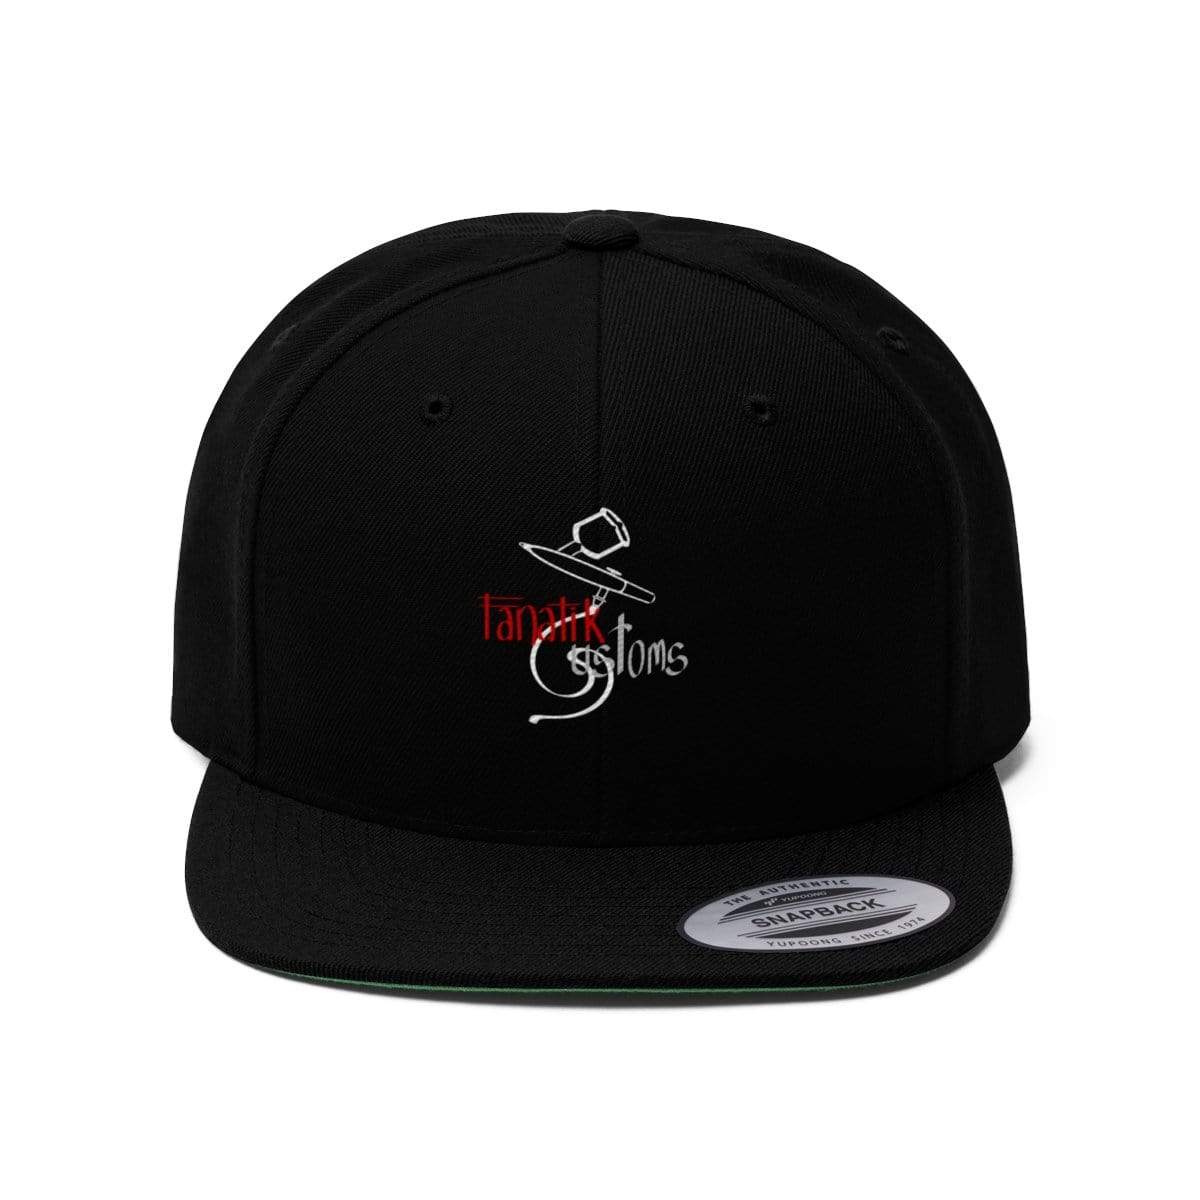 Plumskum Hats Black / One size Will’s Fanatik Customs Flat Bill Hat